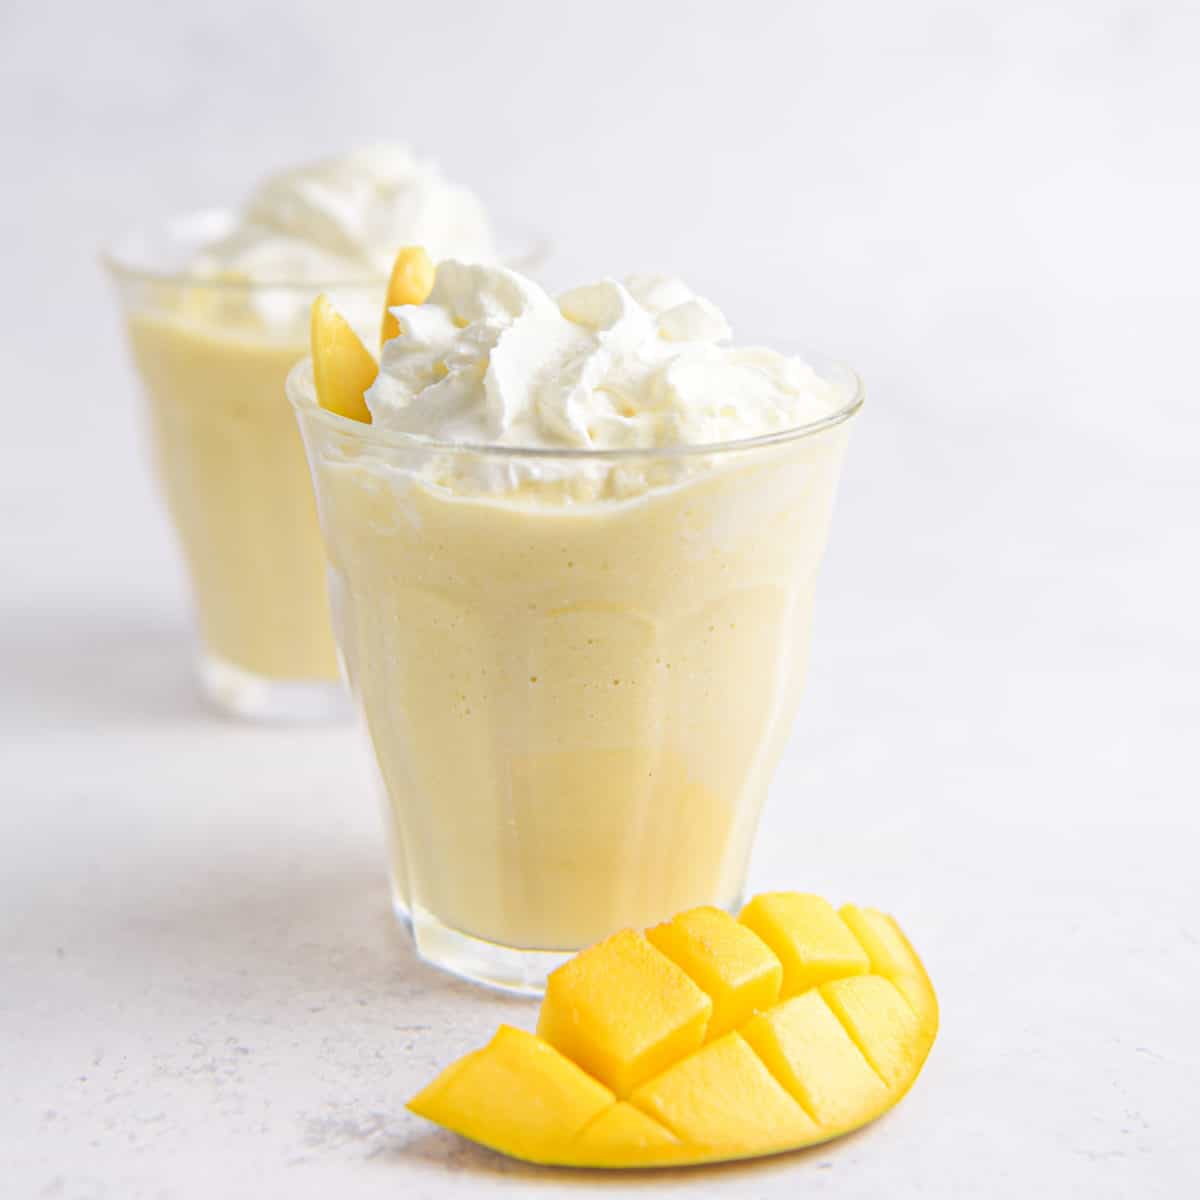 A close up shot of a mango milkshake.